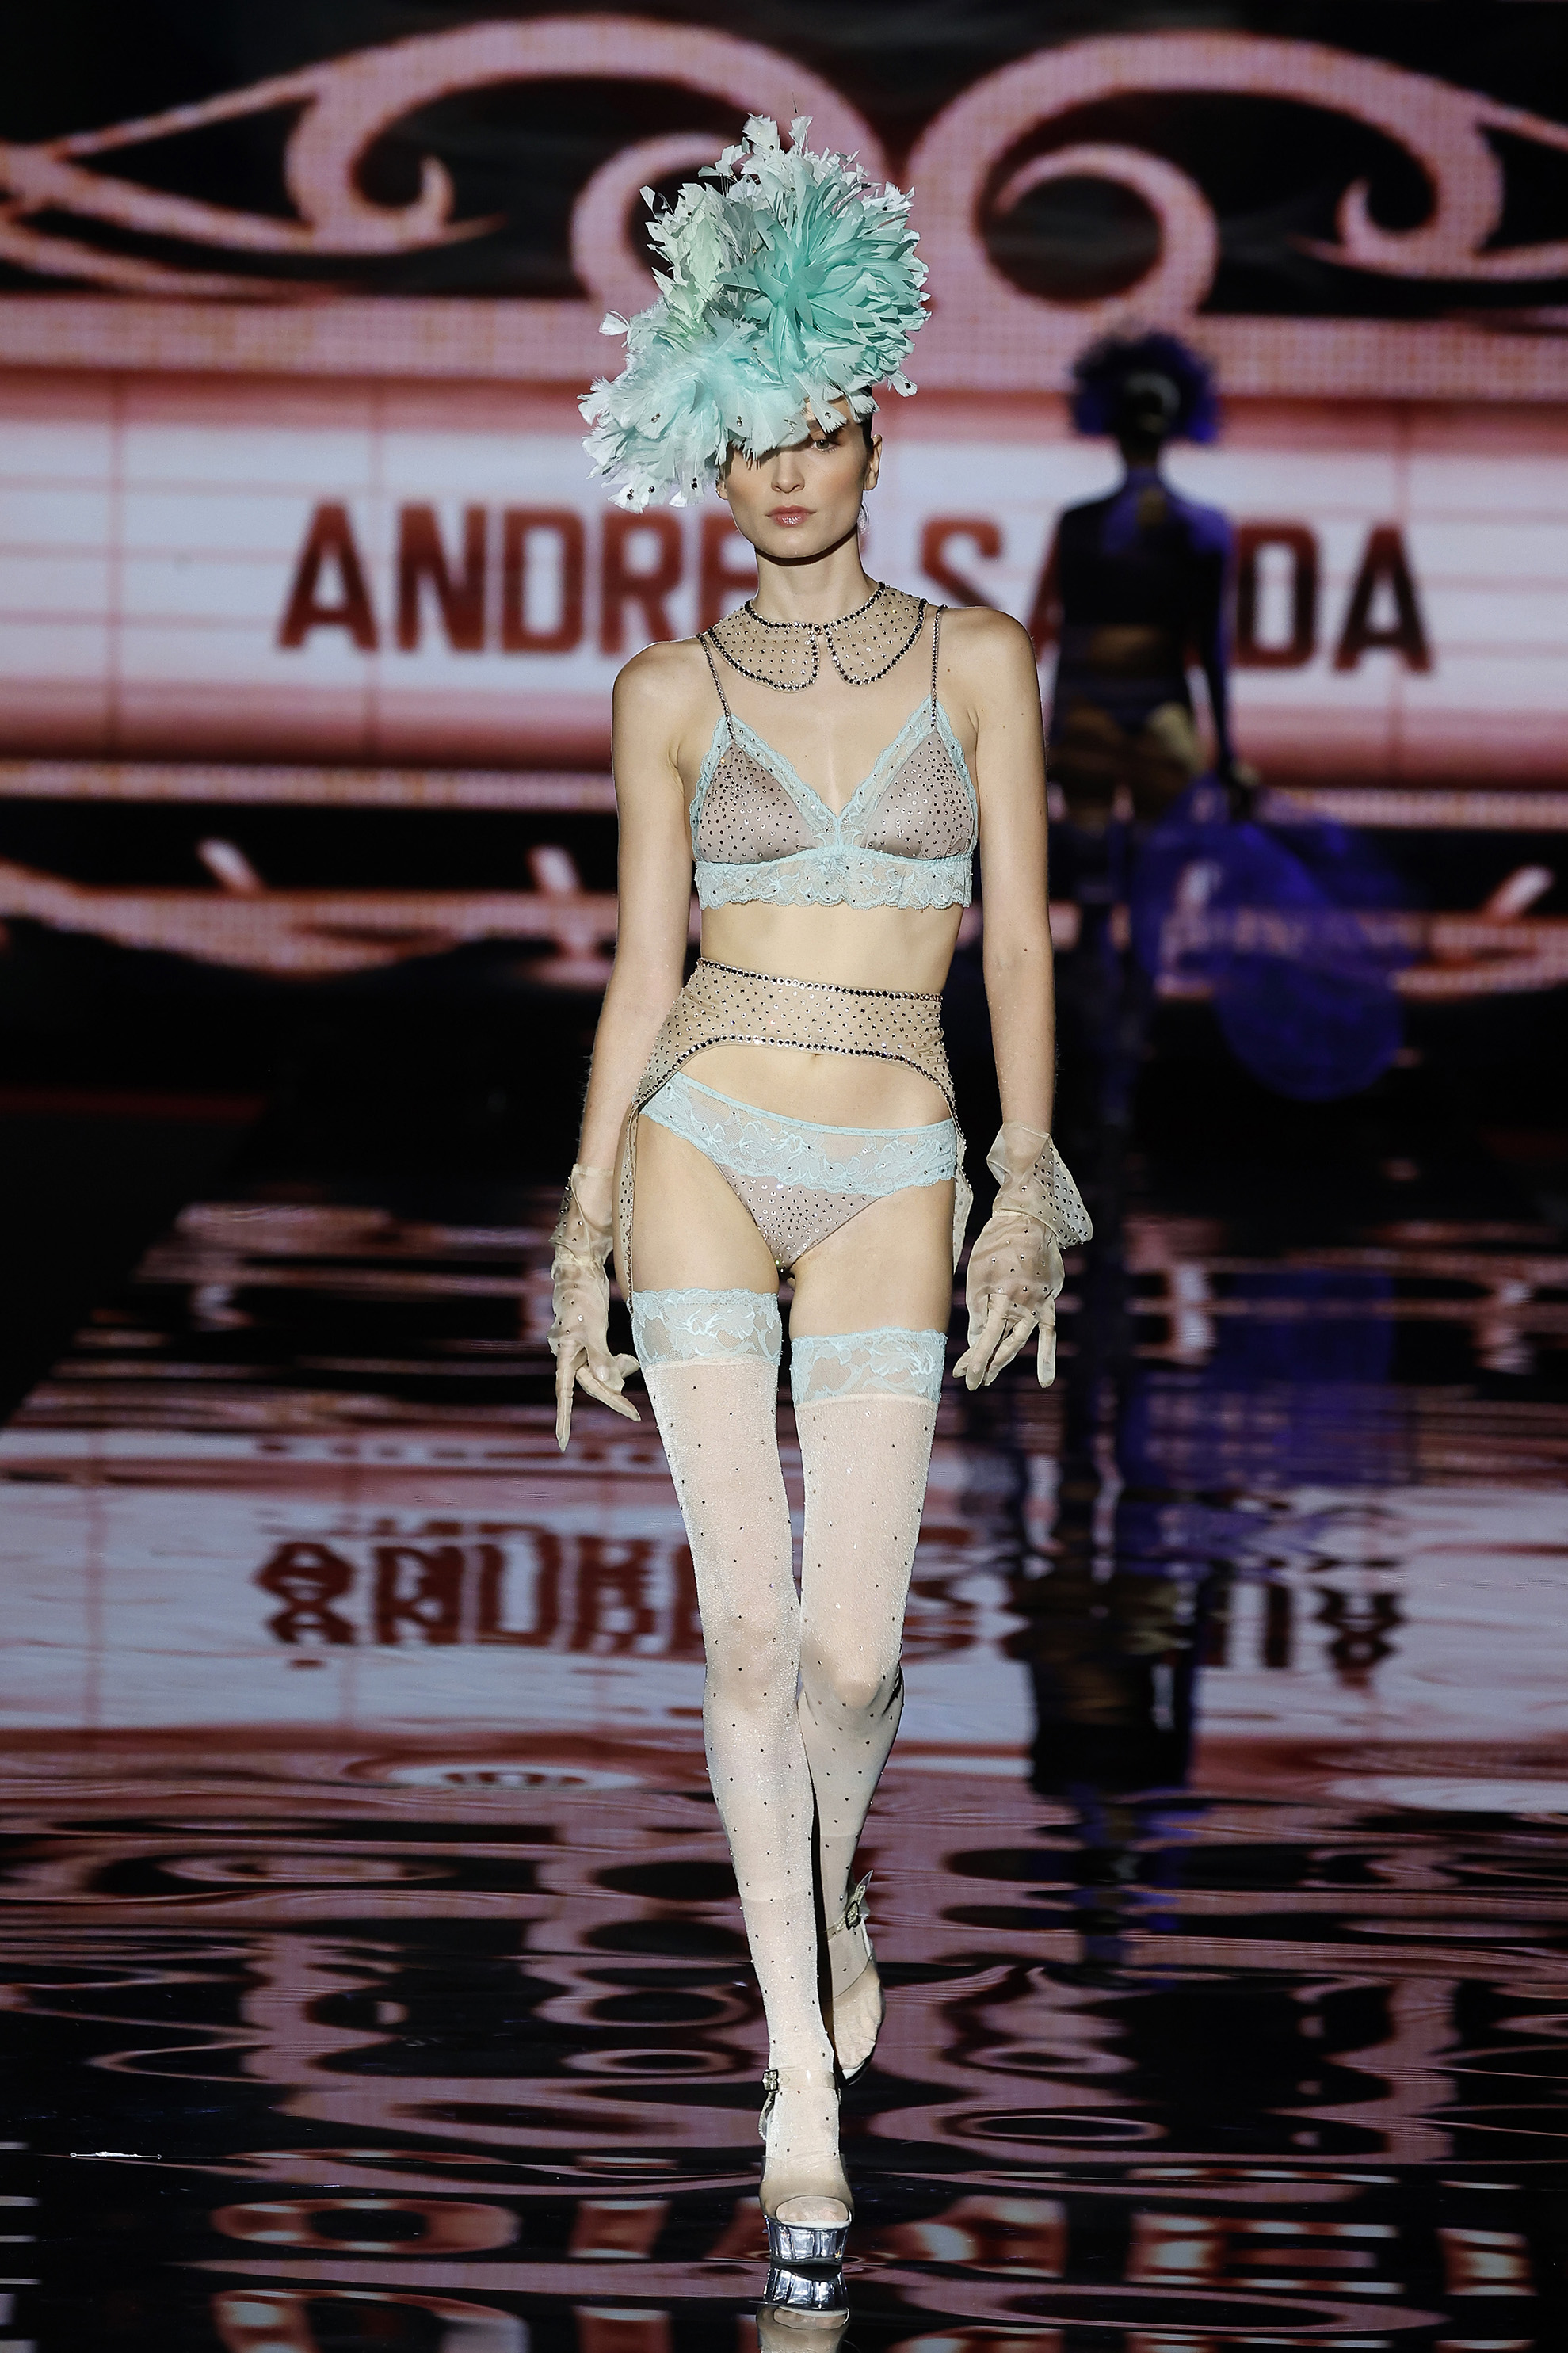 ANDRES SARDA  Luxury lingerie & swimwear